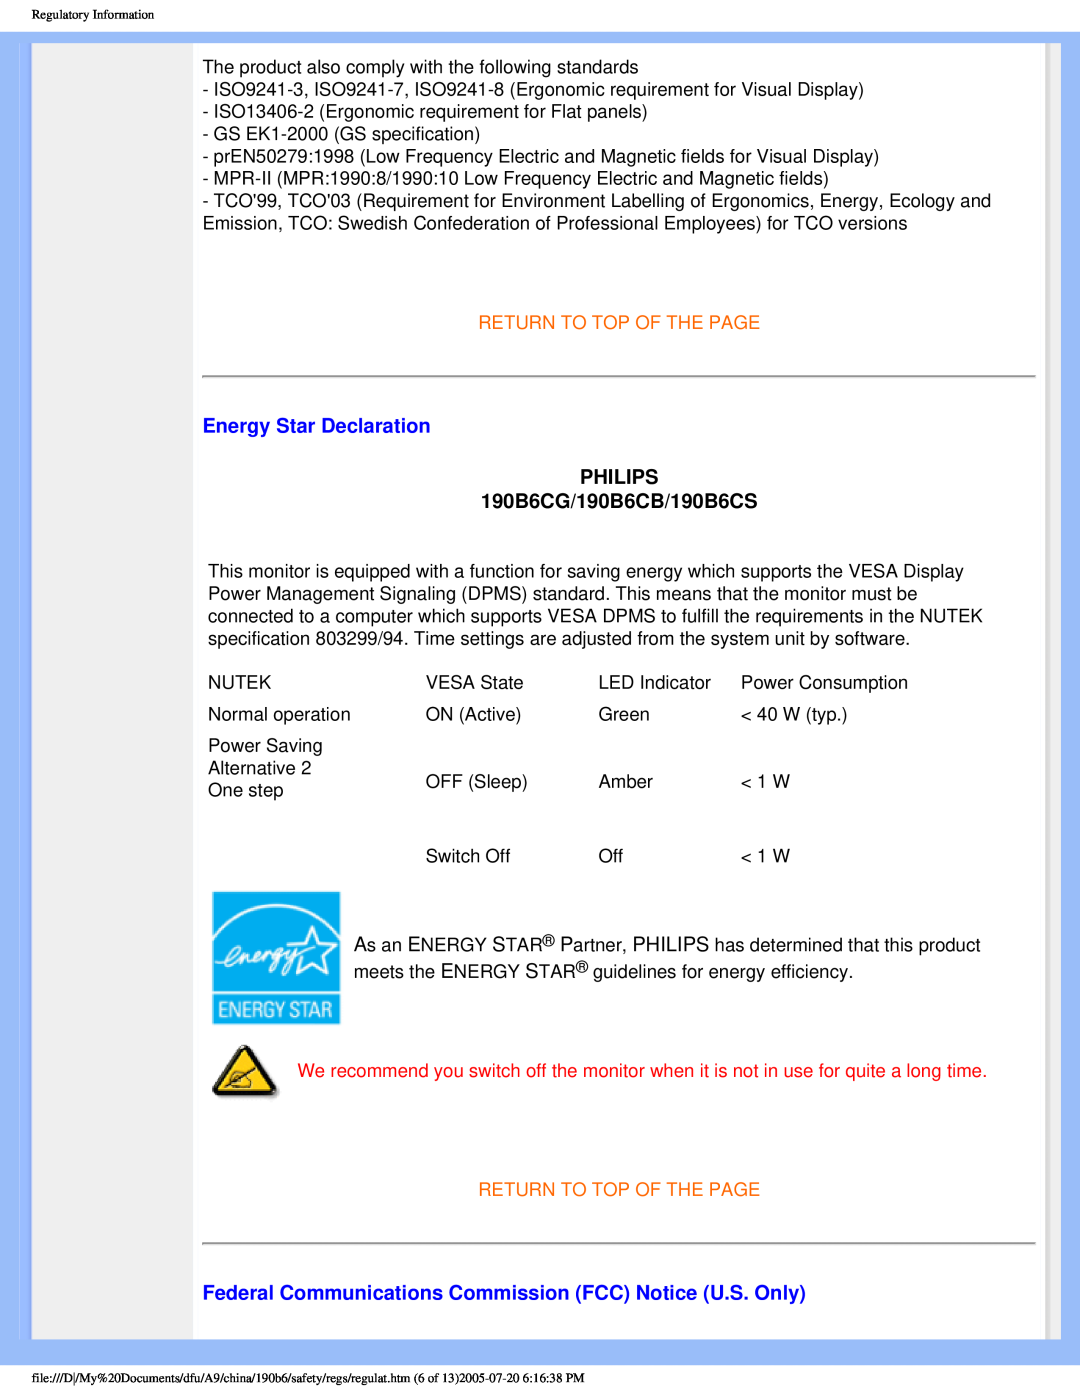 Philips user manual Energy Star Declaration, PHILIPS 190B6CG/190B6CB/190B6CS, Return To Top Of The Page 